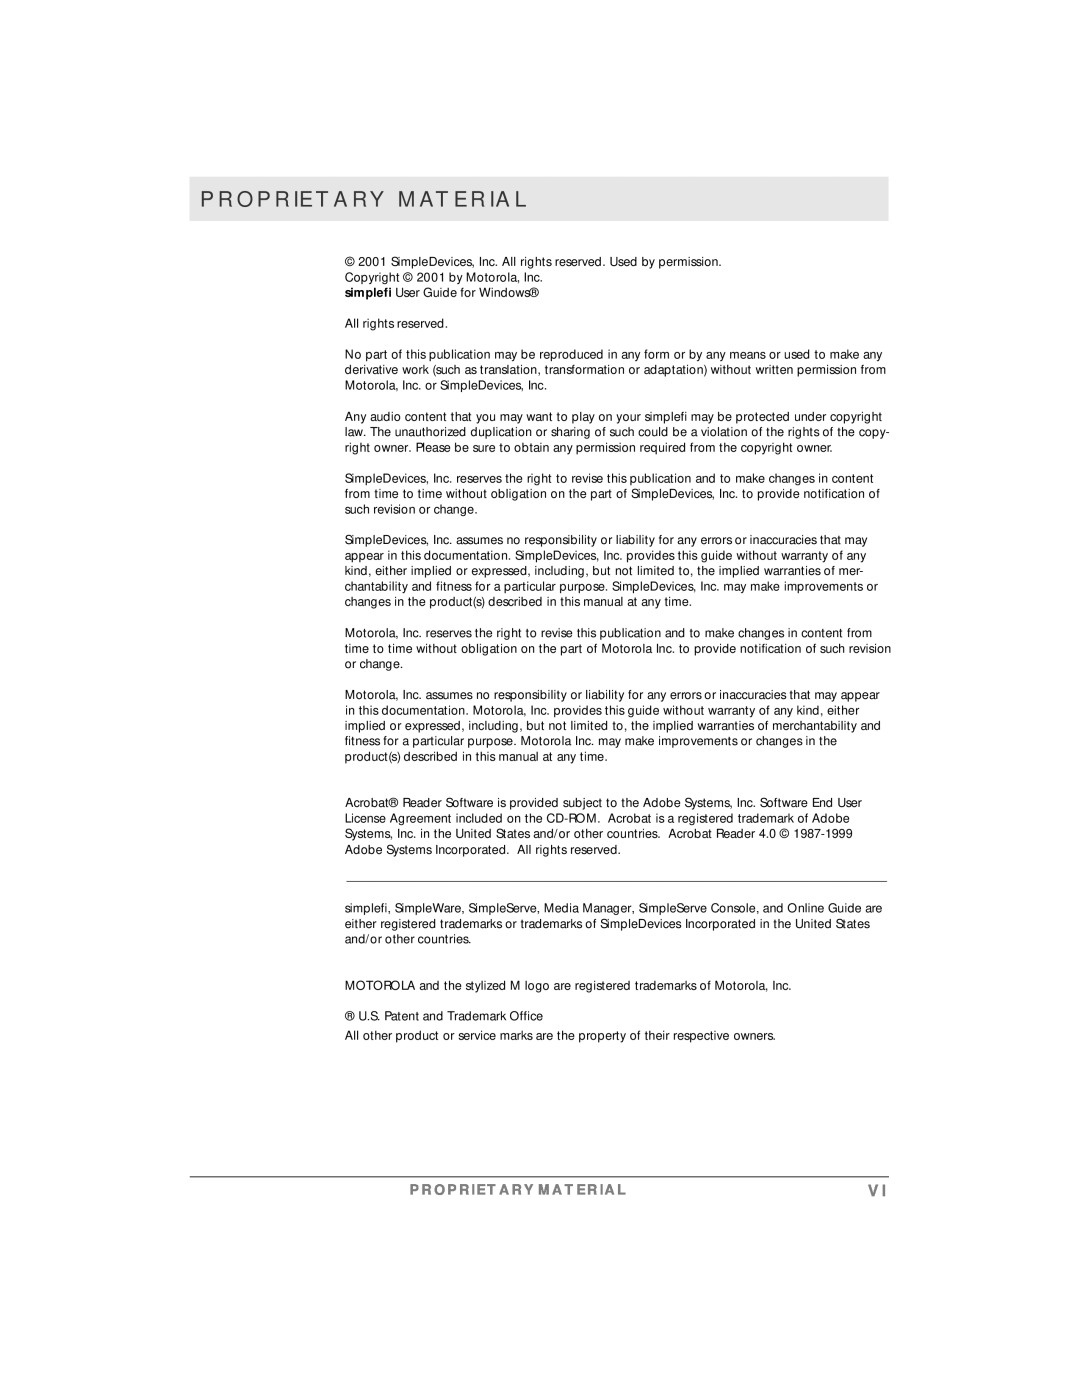 Motorola manual Proprietary Material, Proprietarymaterial, simplefi User Guide for Windows 